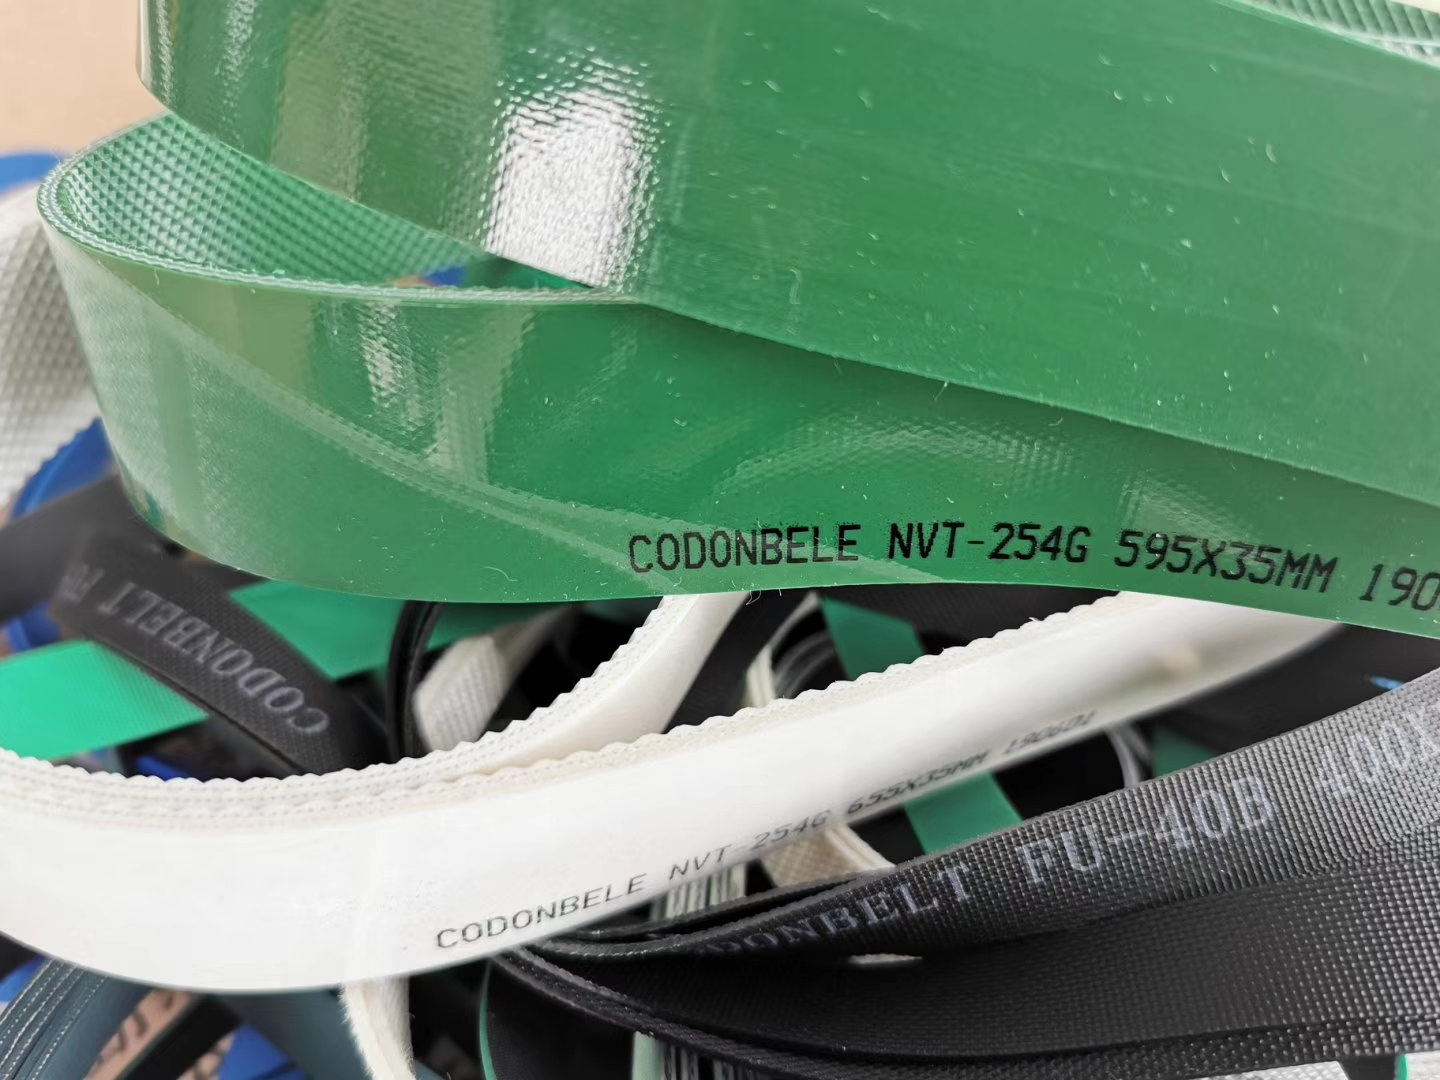 Codonbelt NVT-254F白色钻石格输送带 科动贝特NVT-254G绿色小方格花纹输送带